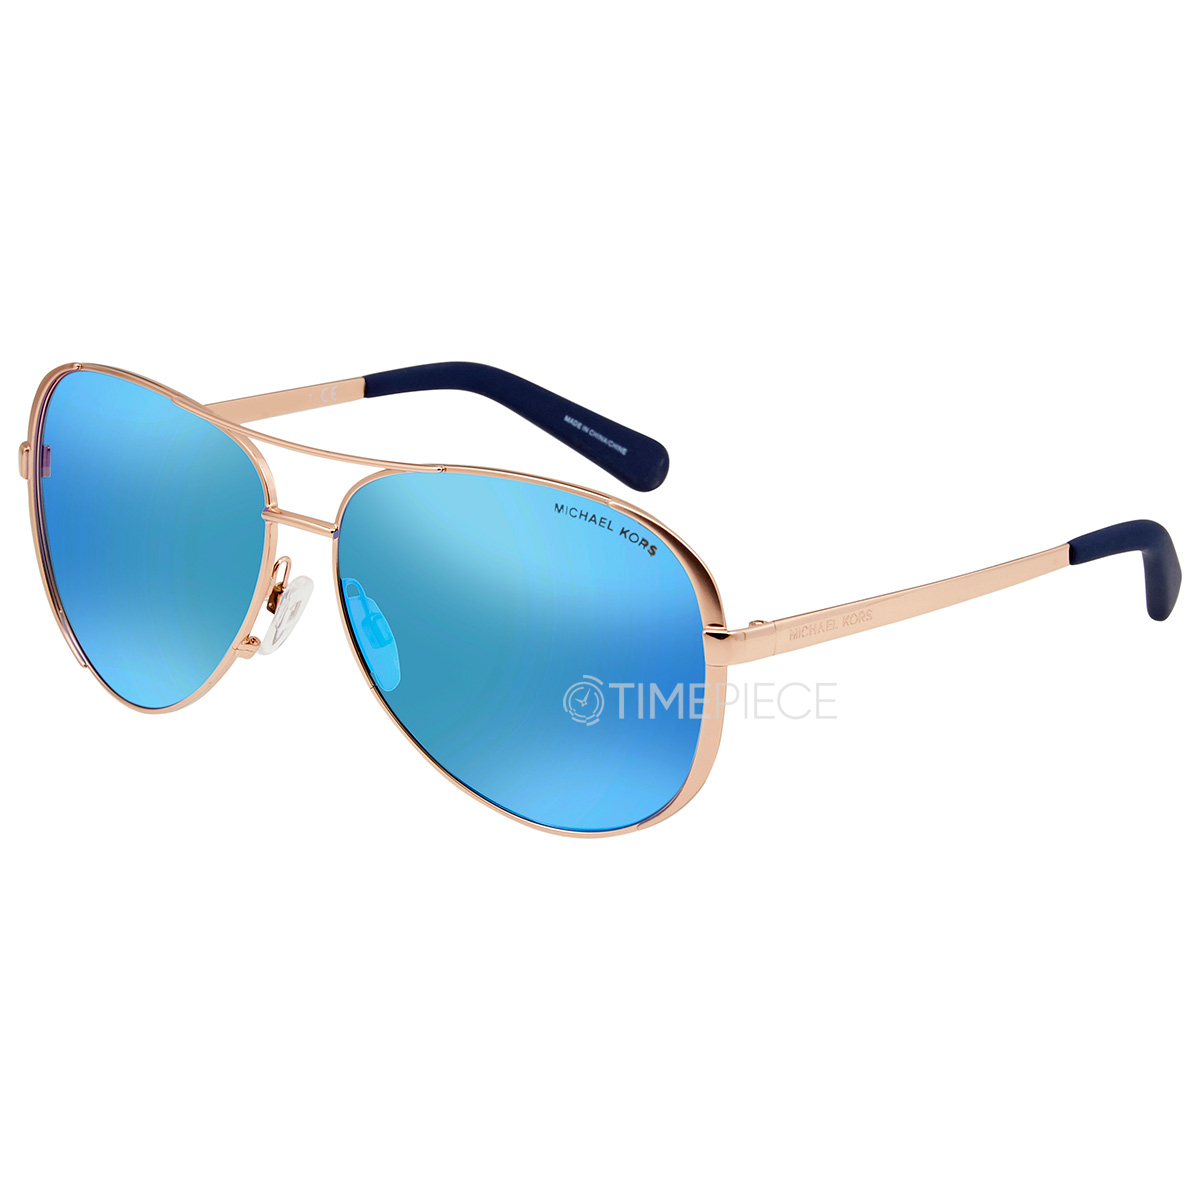 Michael Kors Chelsea Mirrored Blue Aviator Ladies Sunglasses  MK5004-100325-59